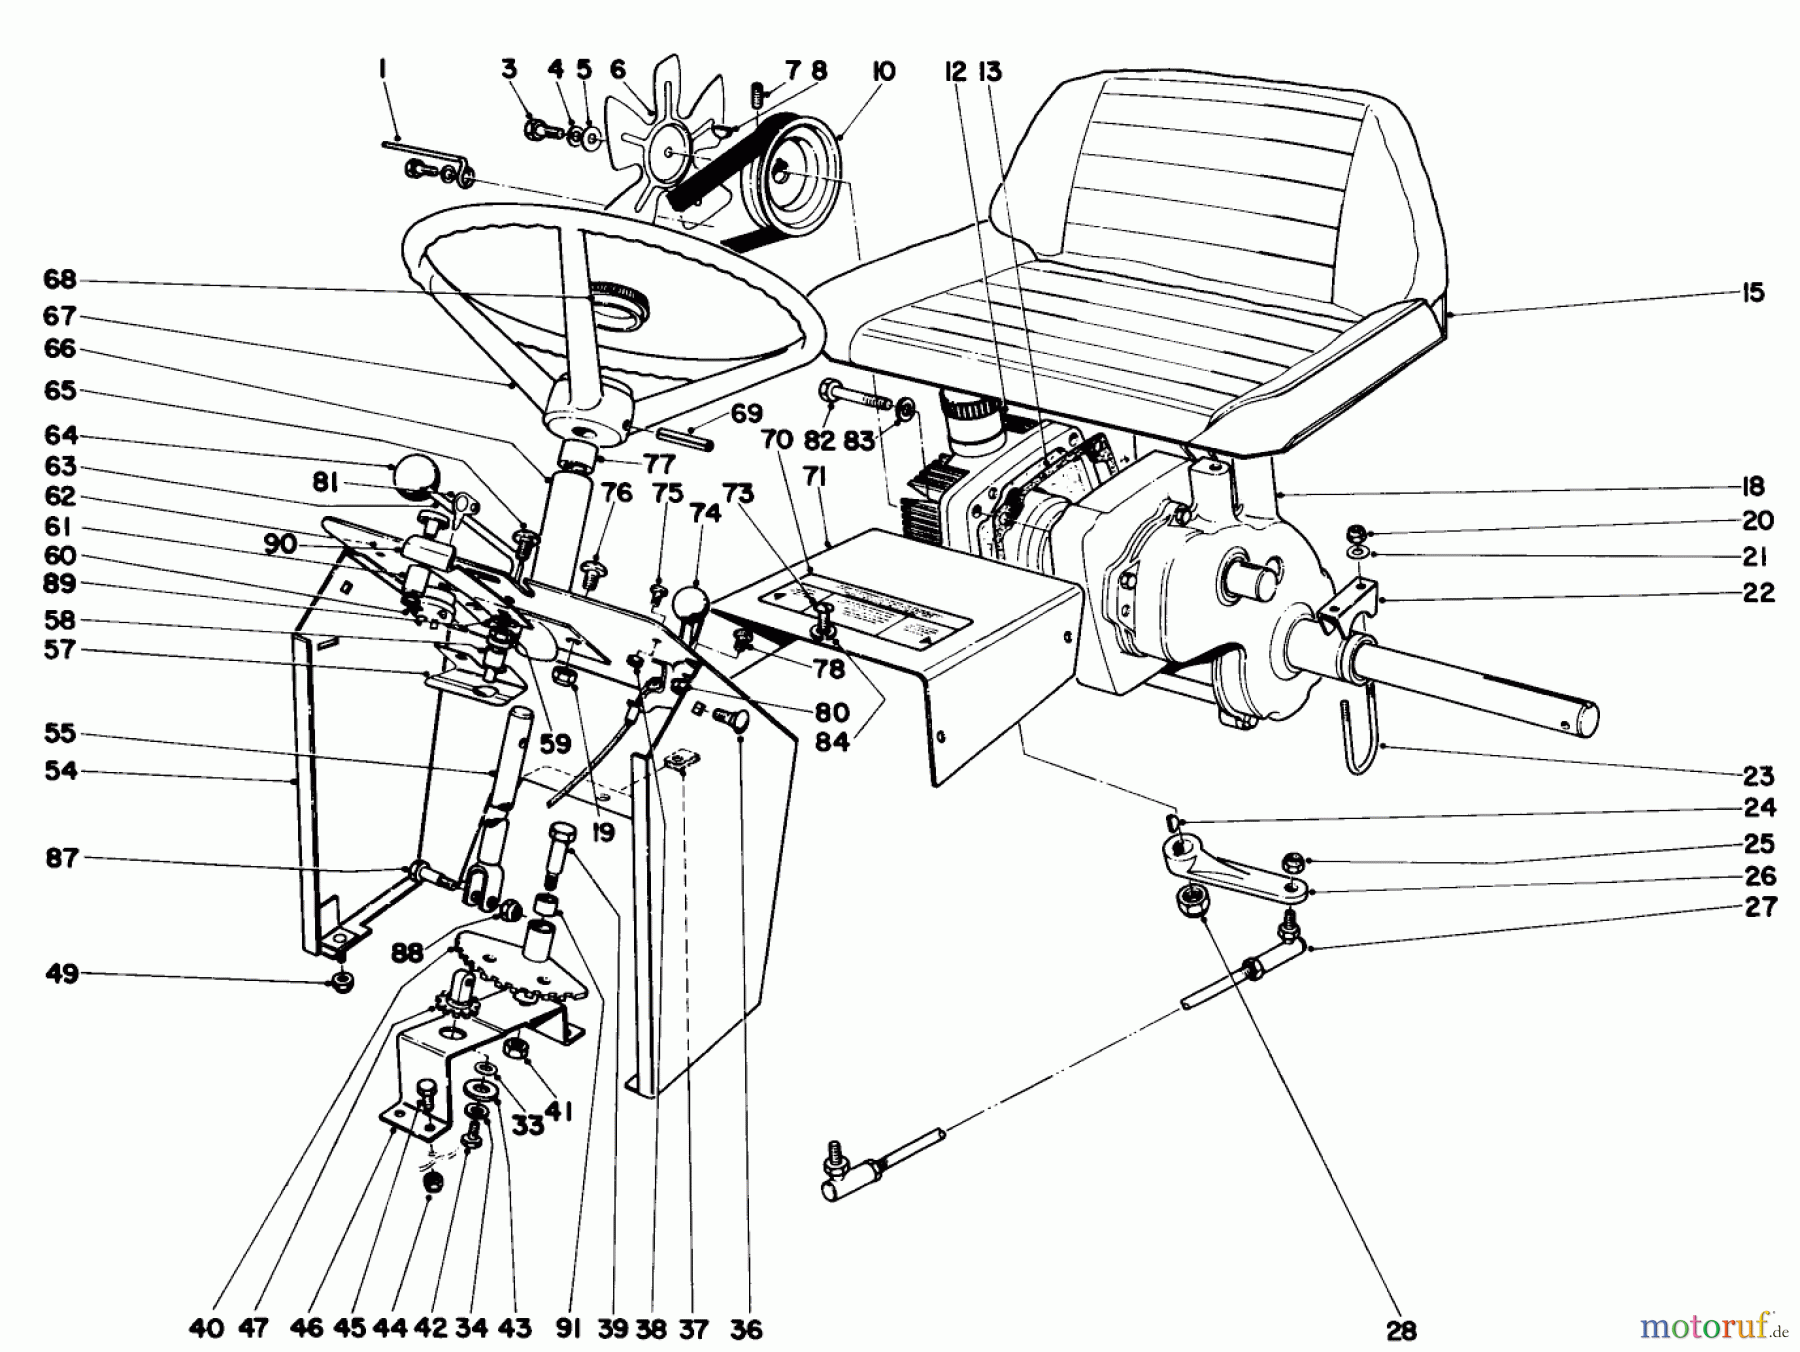  Toro Neu Mowers, Lawn & Garden Tractor Seite 1 55152 (888) - Toro 888 Toromatic Tractor, 1970 (0000001-0999999) DASH AND TRANSAXLE ASSEMBLY